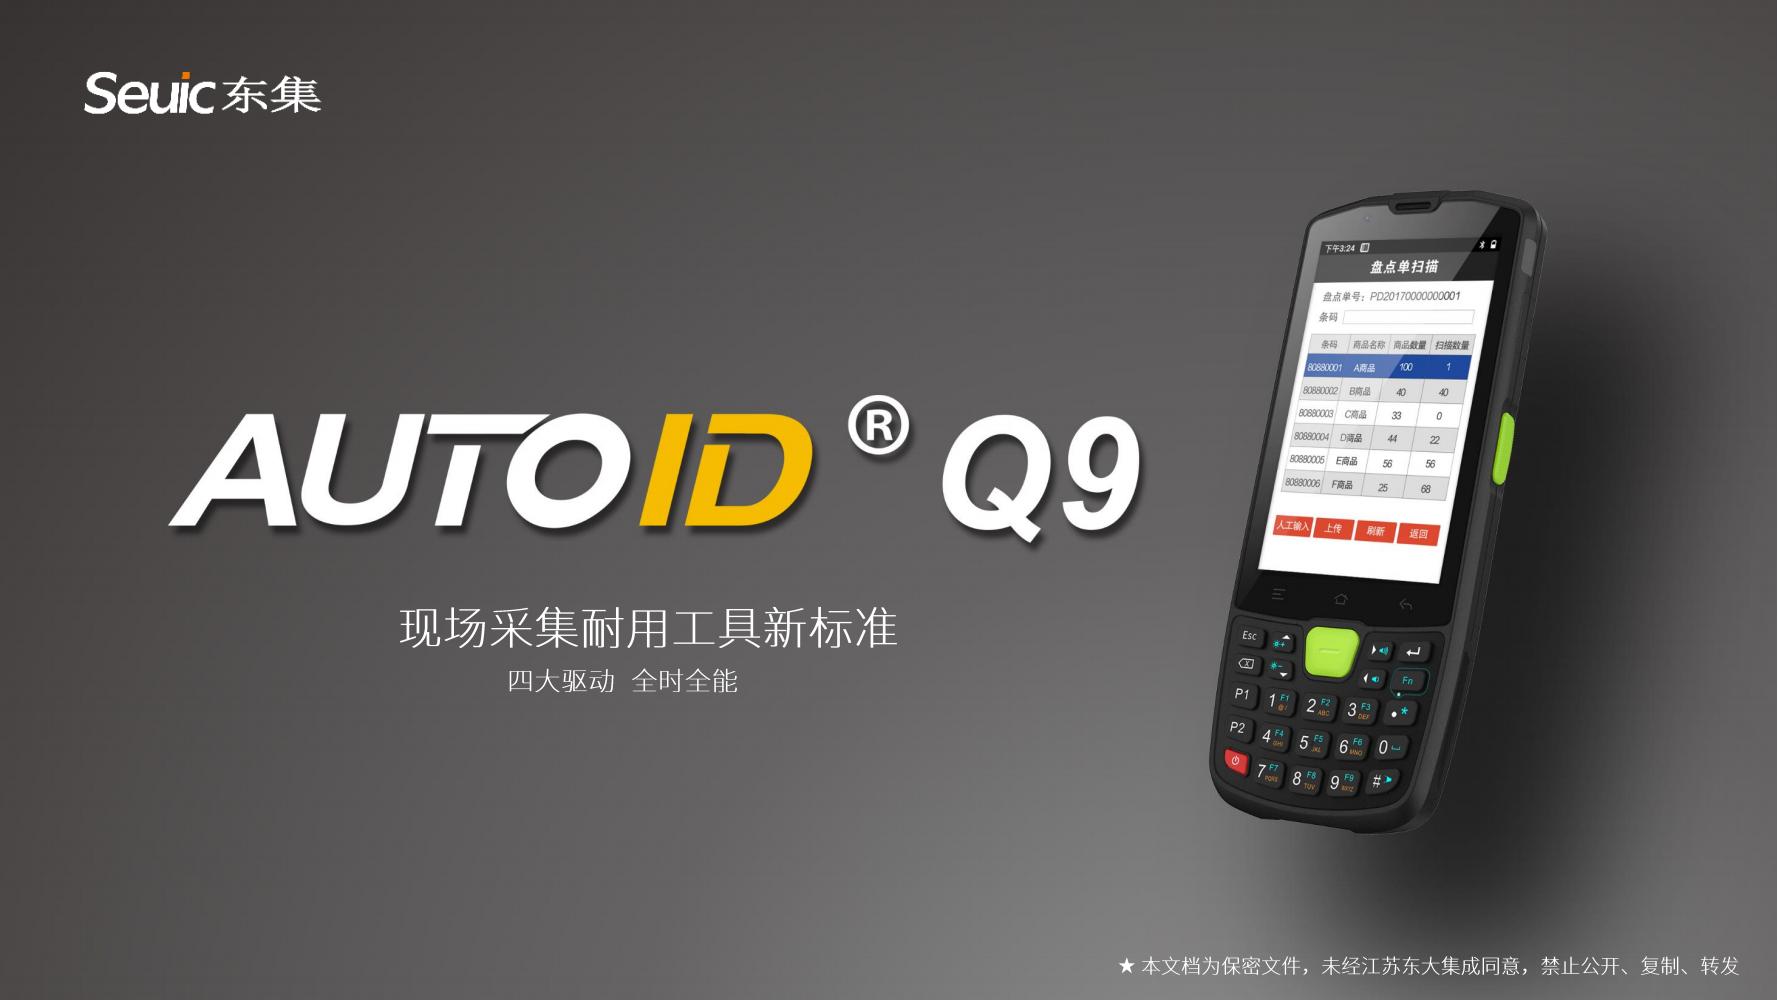 AUTOID Q9产品介绍V1.2(1)_00.jpg